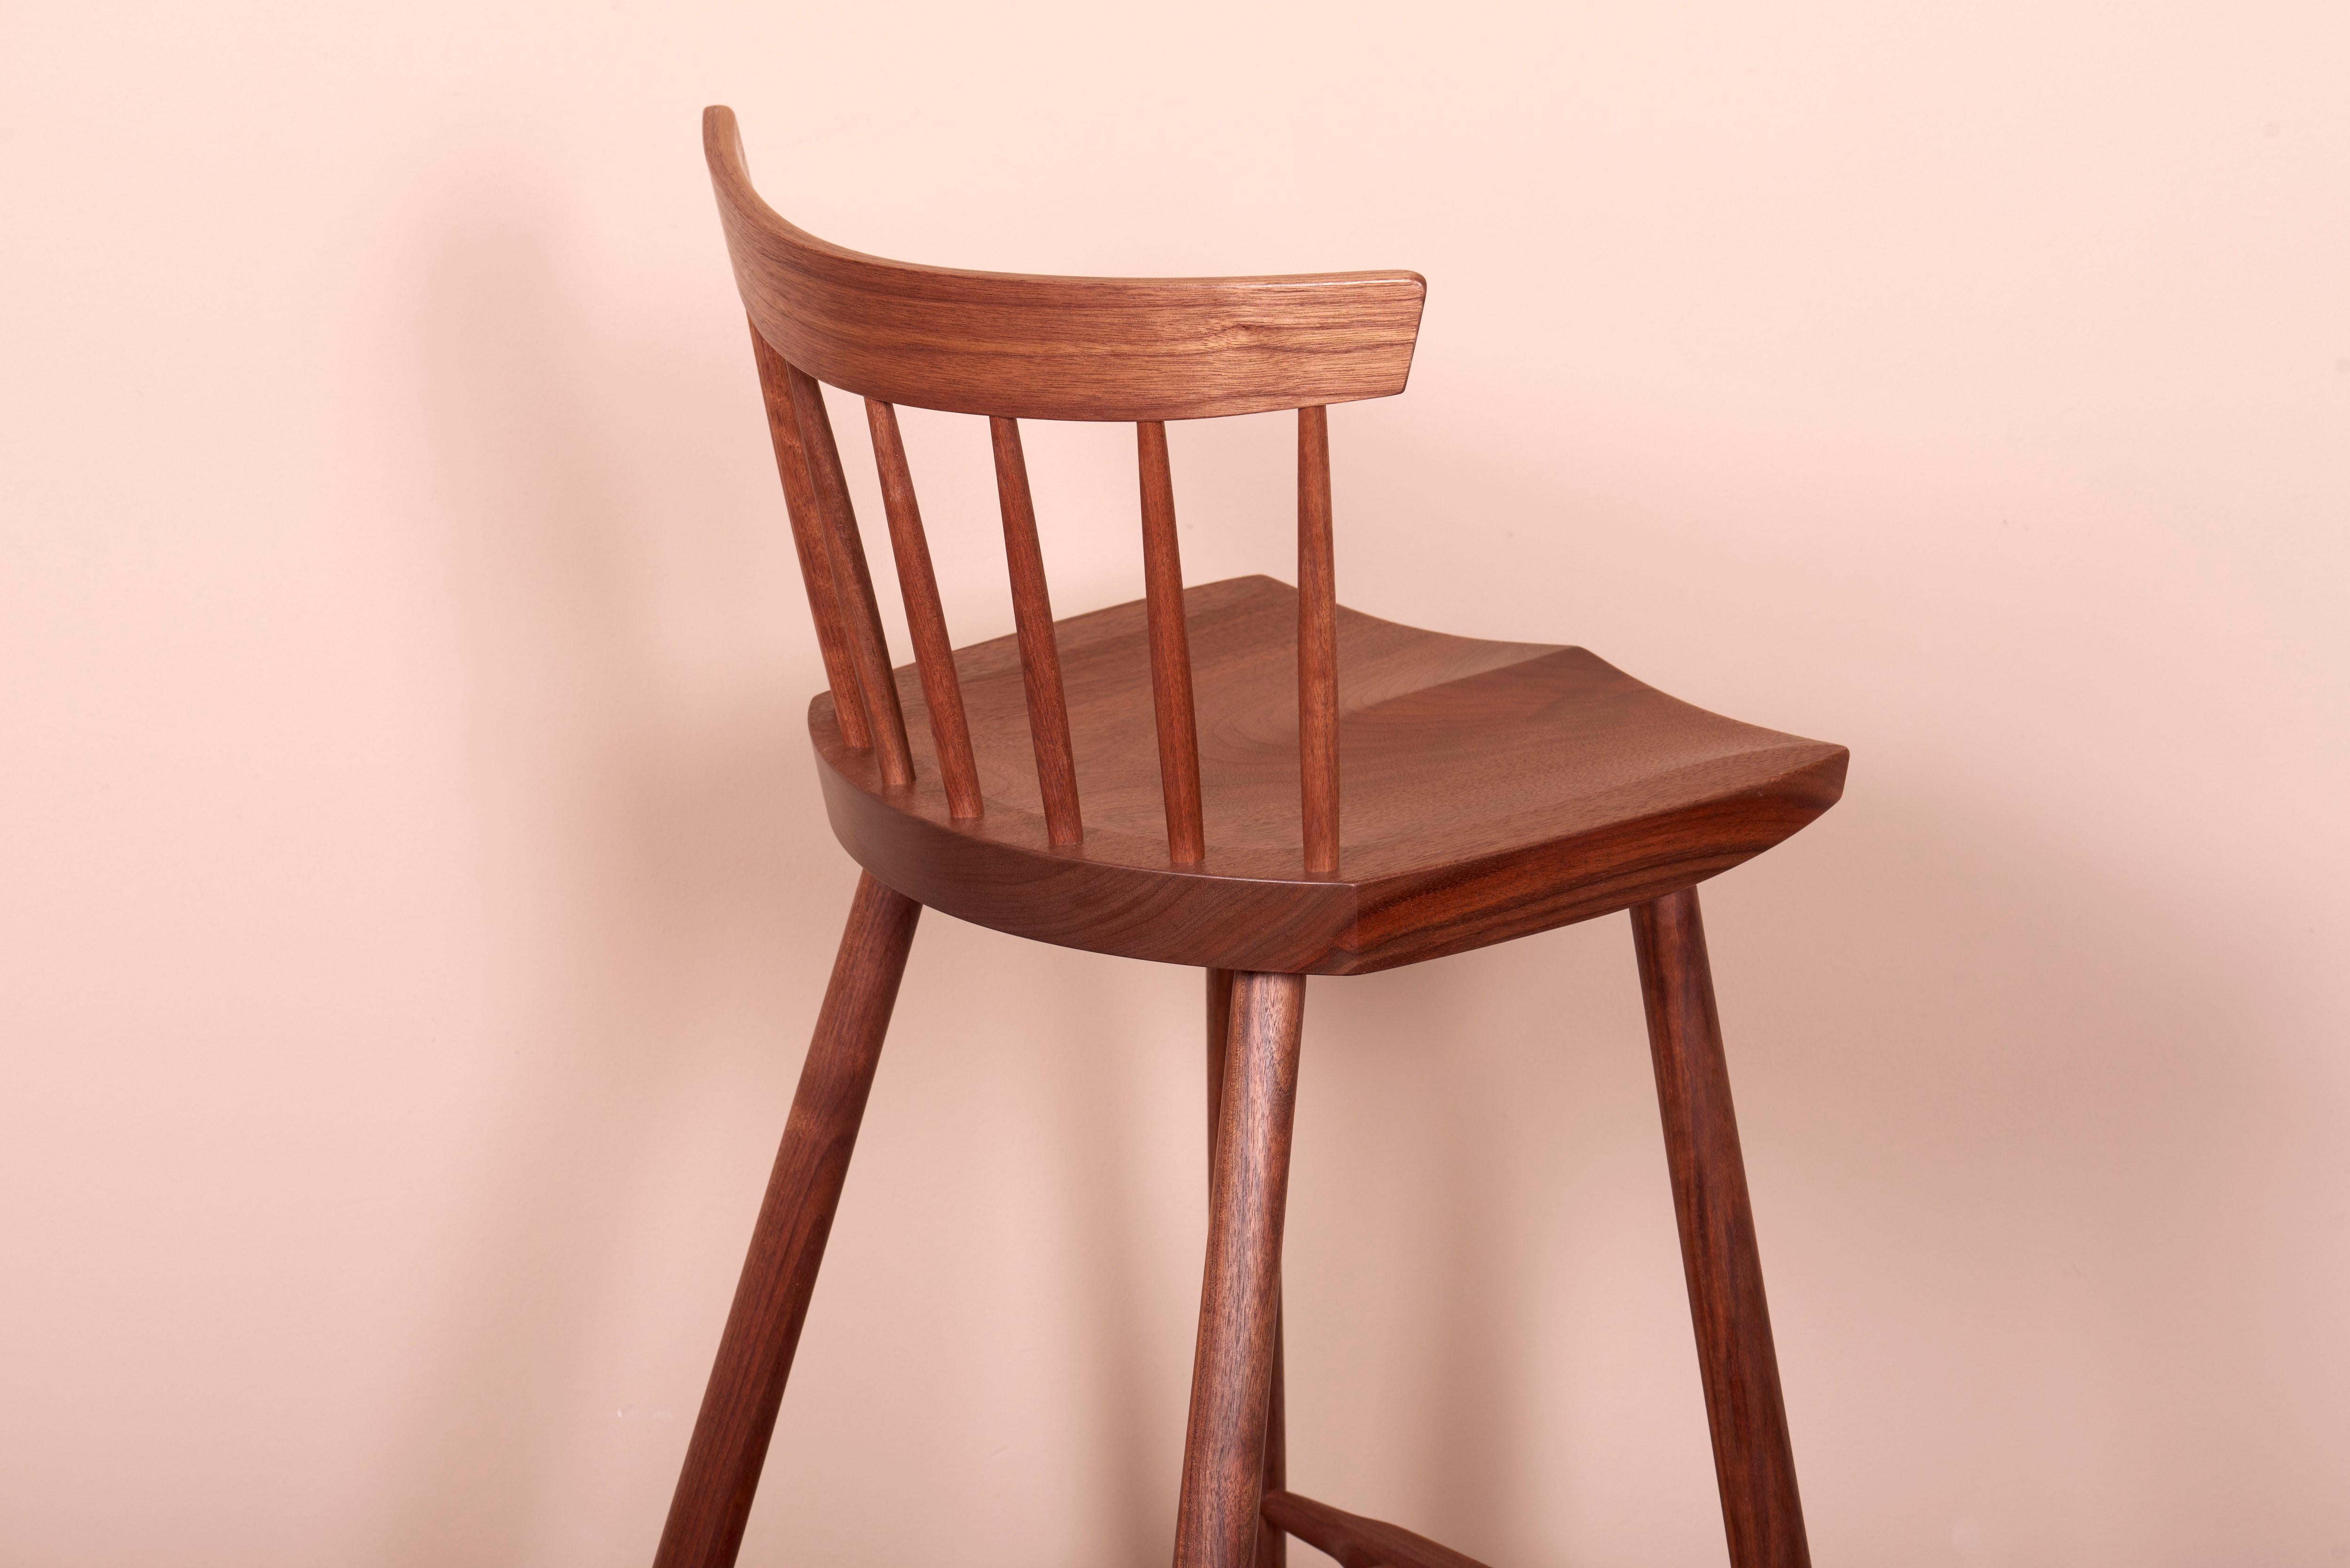 Four Mira Nakashima 4-Legged High Chairs based on a design by George Nakashima For Sale 6